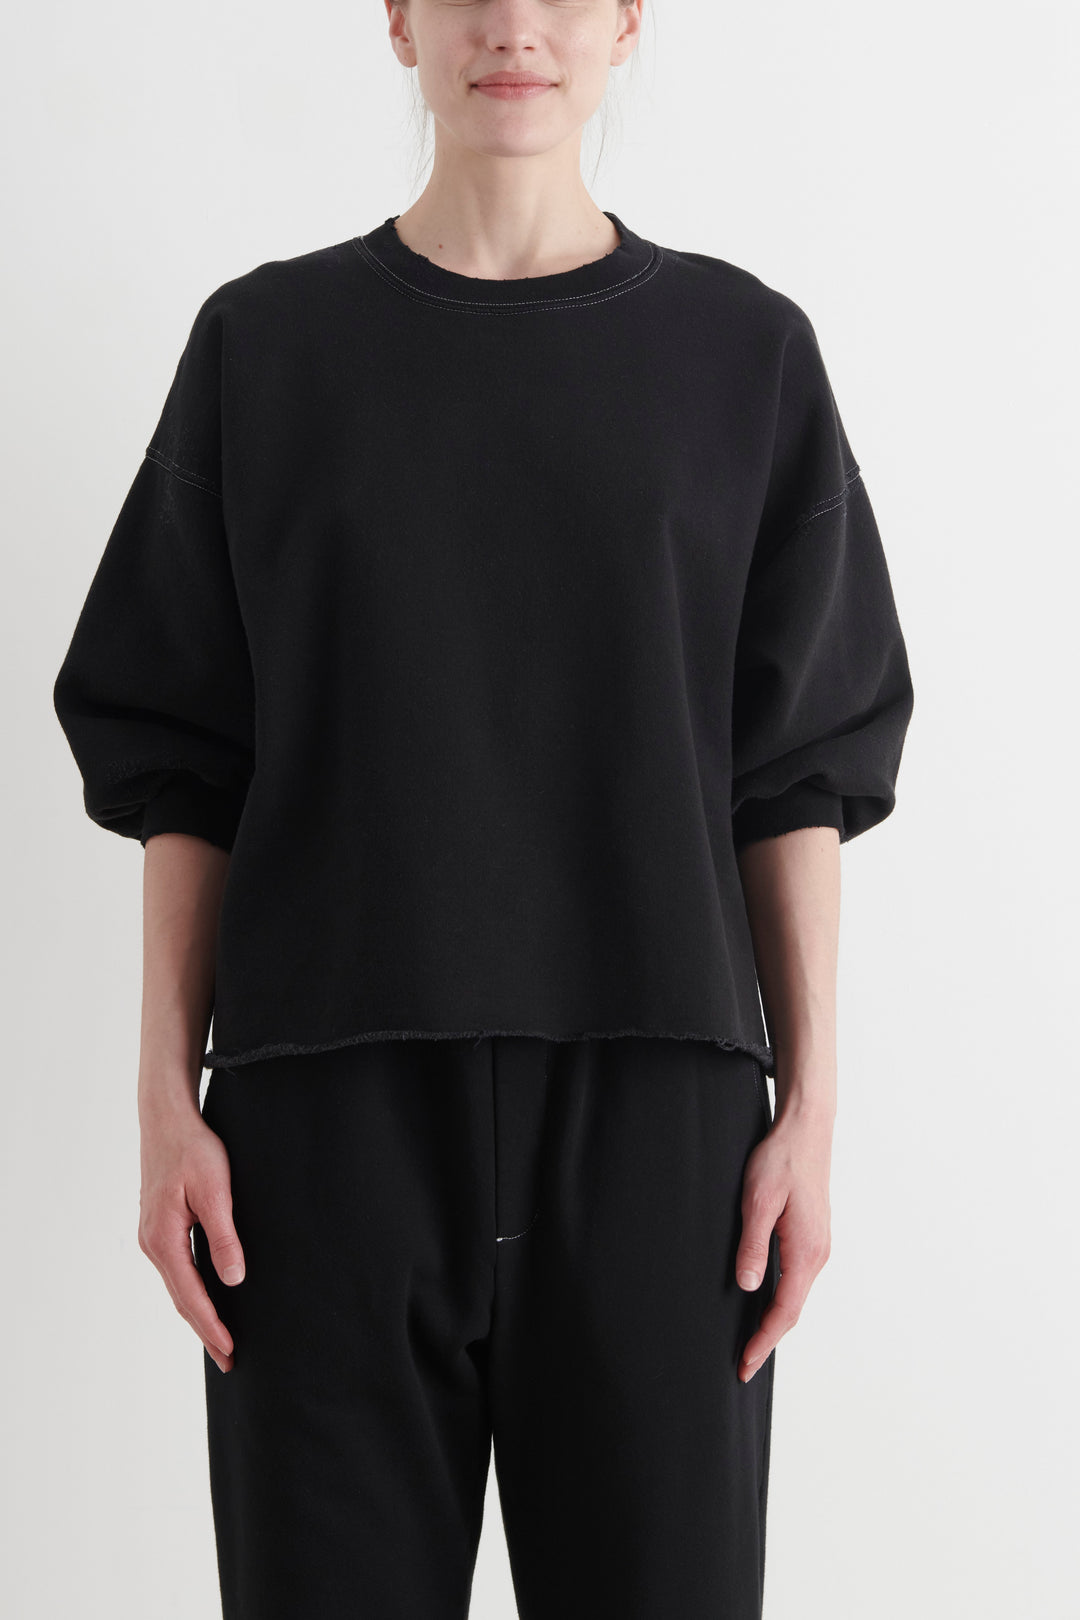 Fond Sweatshirt - Charcoal - Frontiers Woman